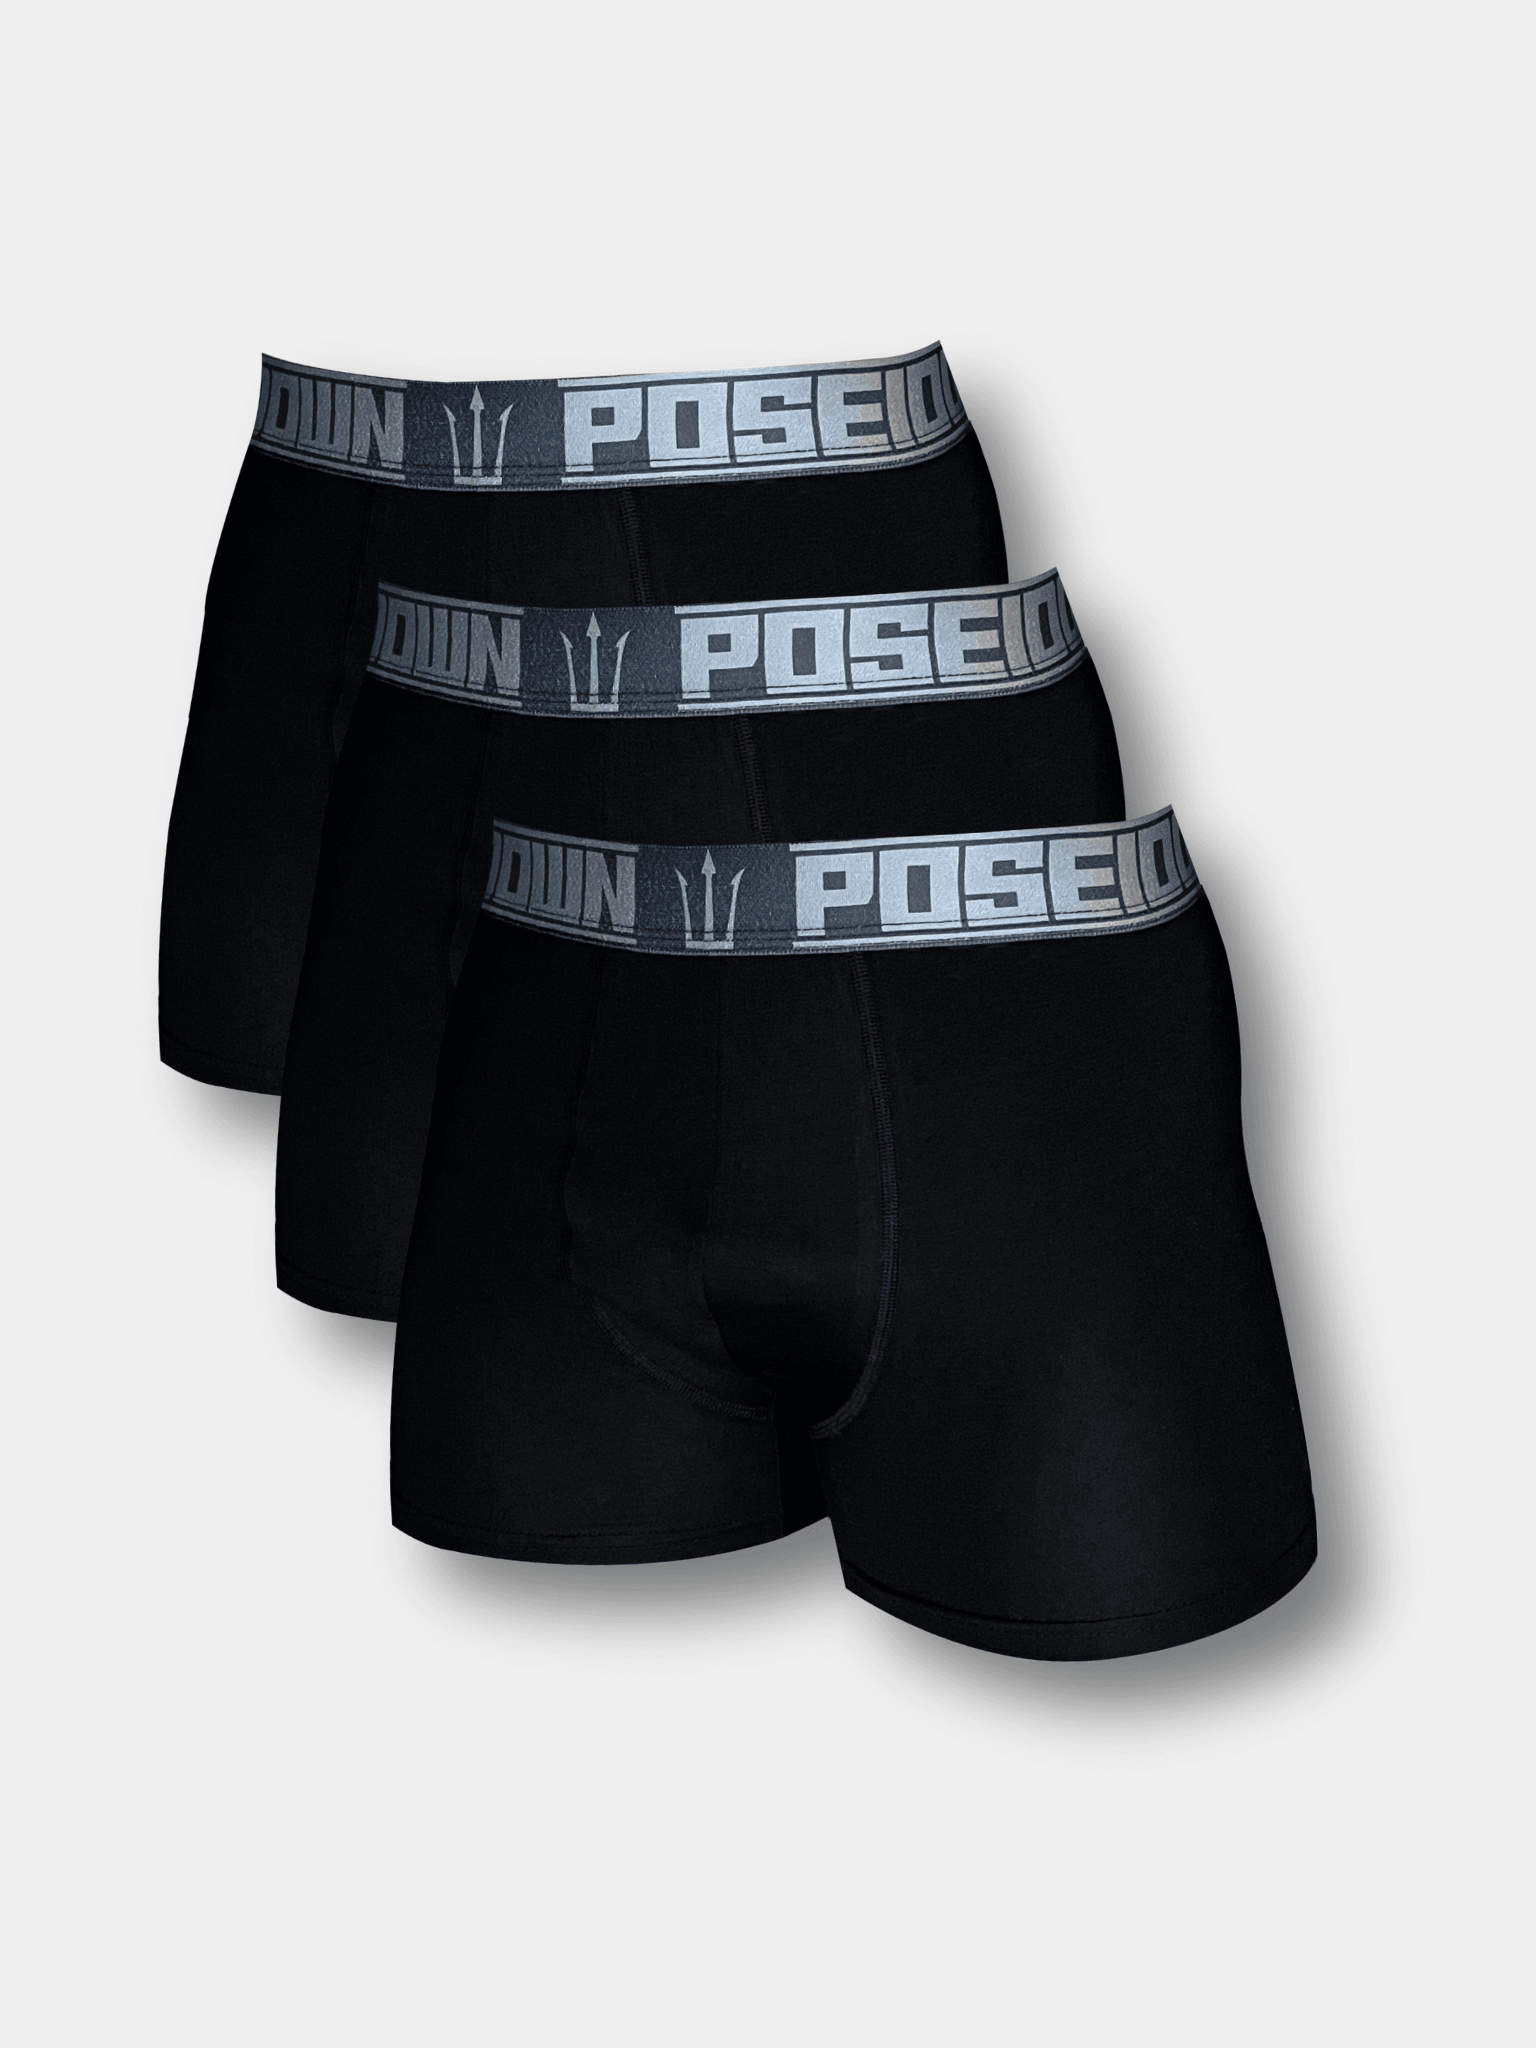 3 KUTU FORCEBOXER Triple | Men Underwear